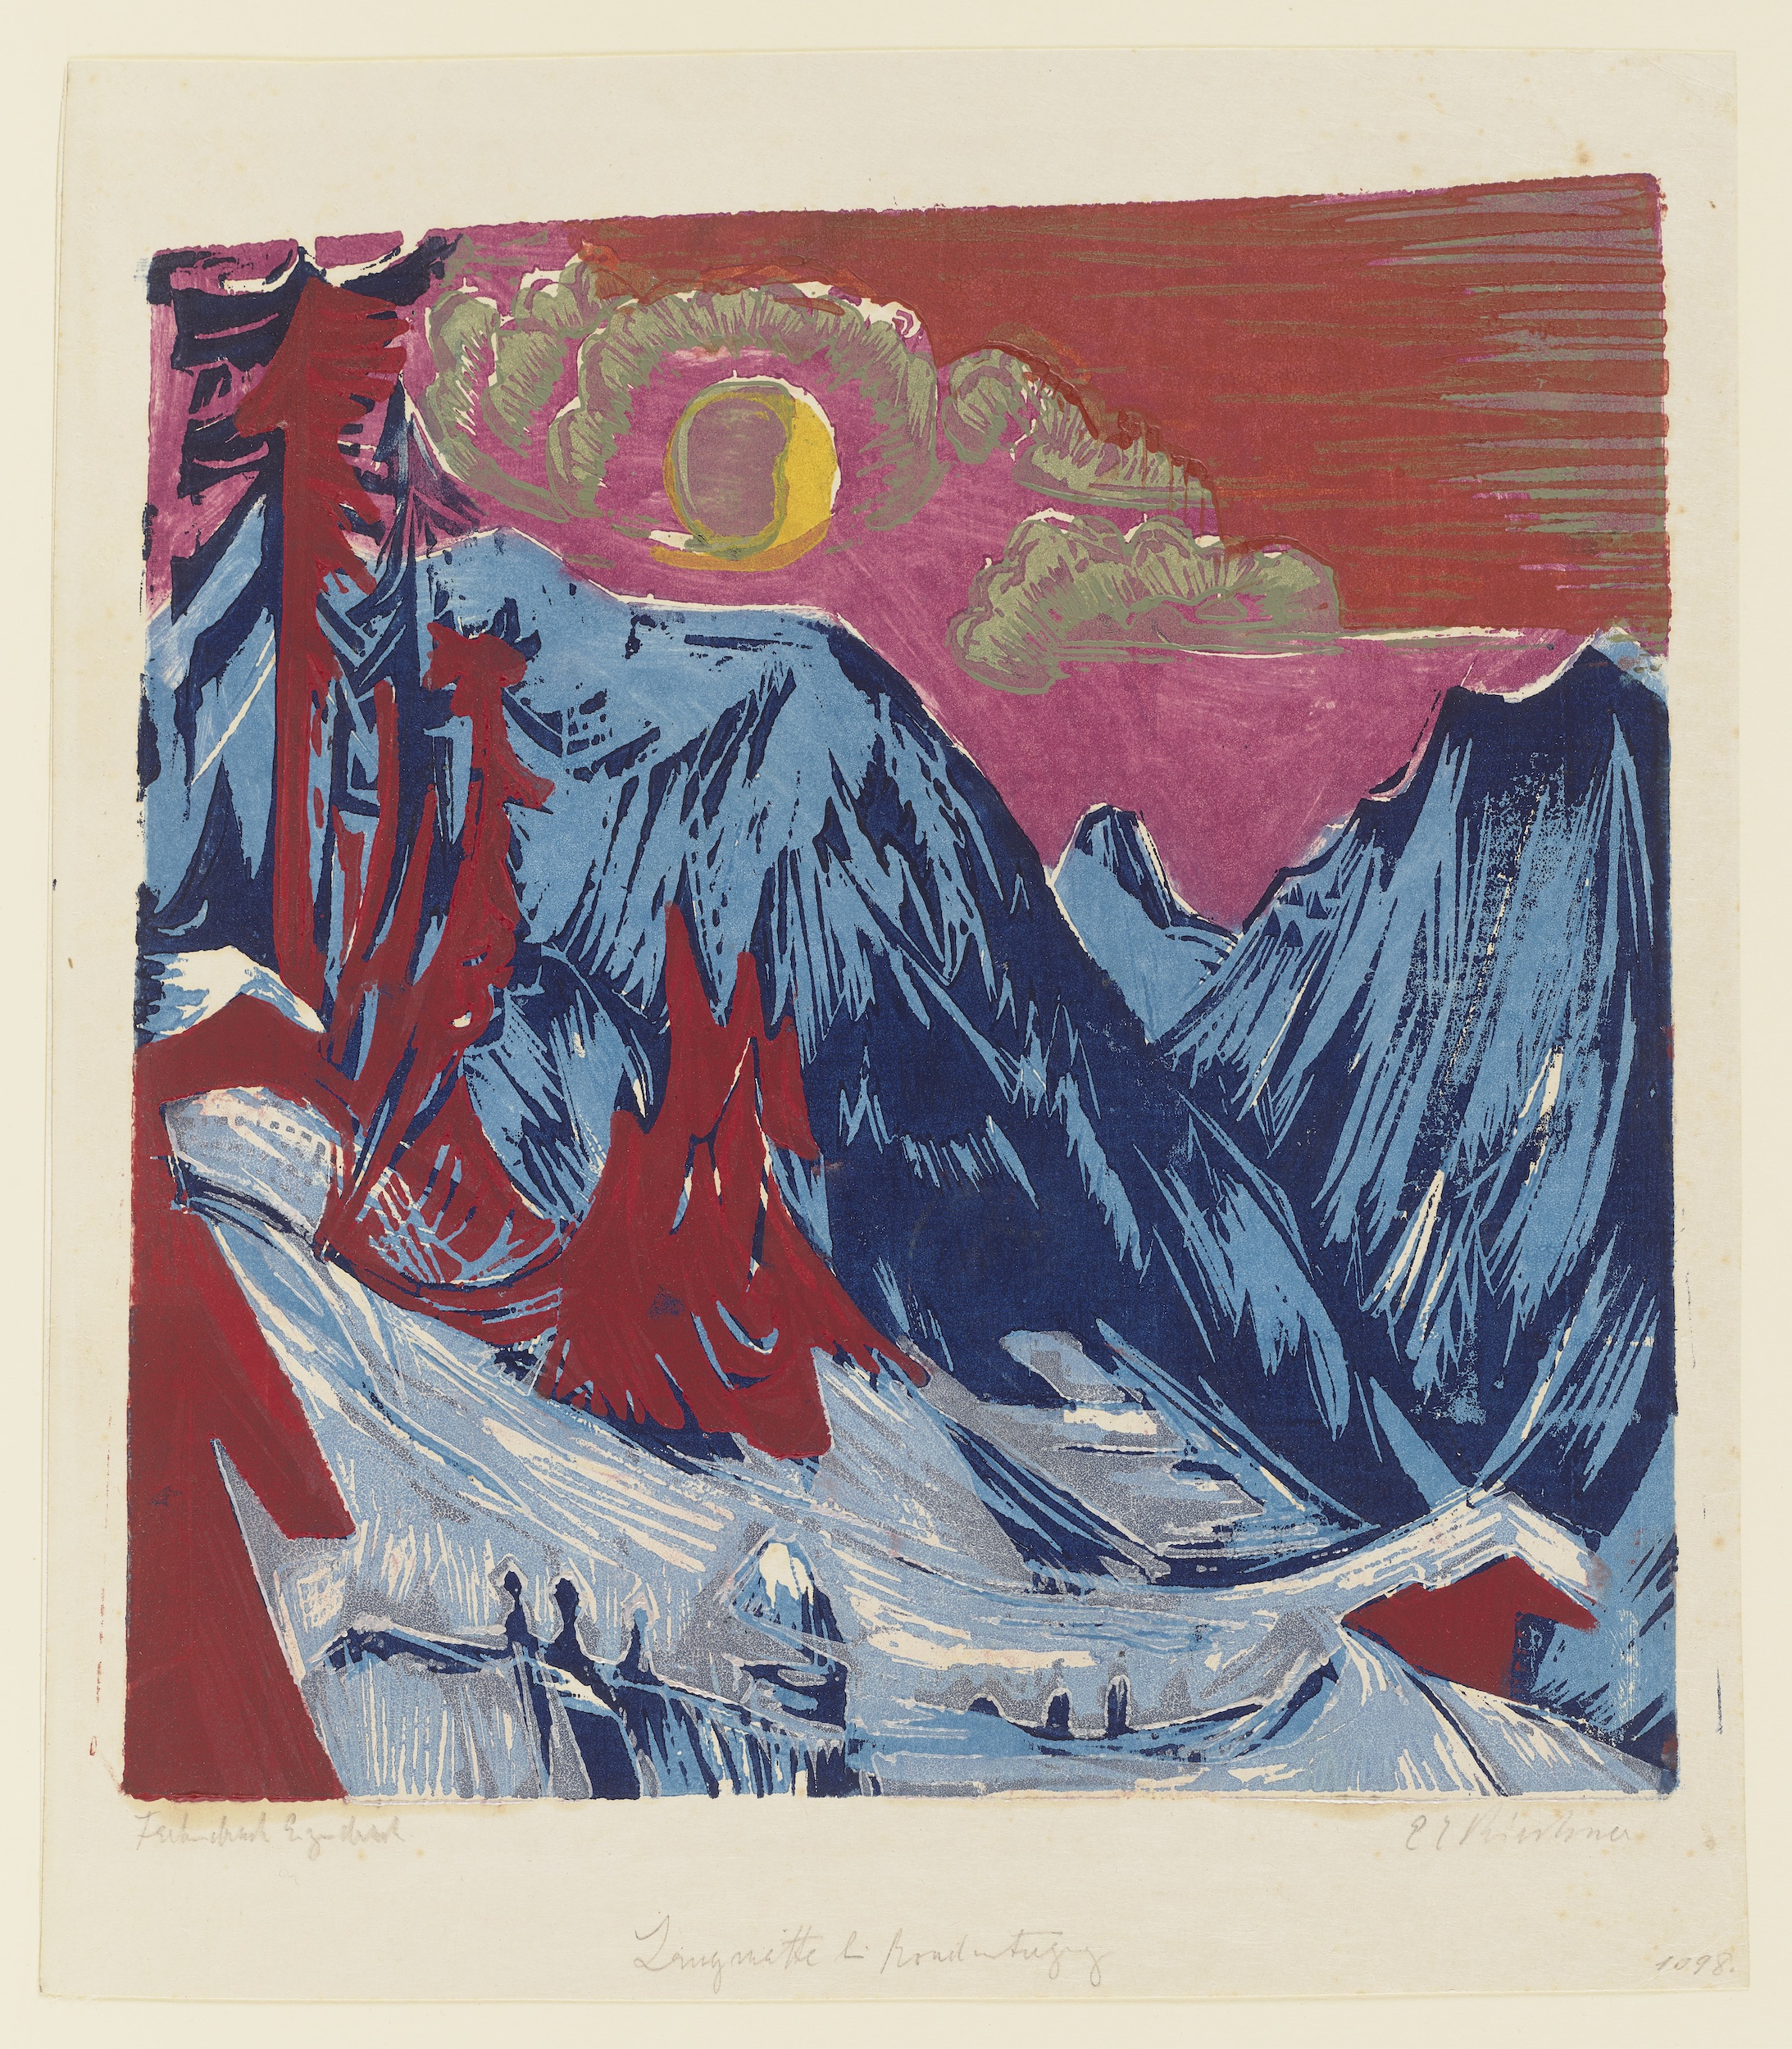 Winter Moon Night by Ernst Ludwig Kirchner - 1919 - 36.7 x 32.3 cm Städel Museum